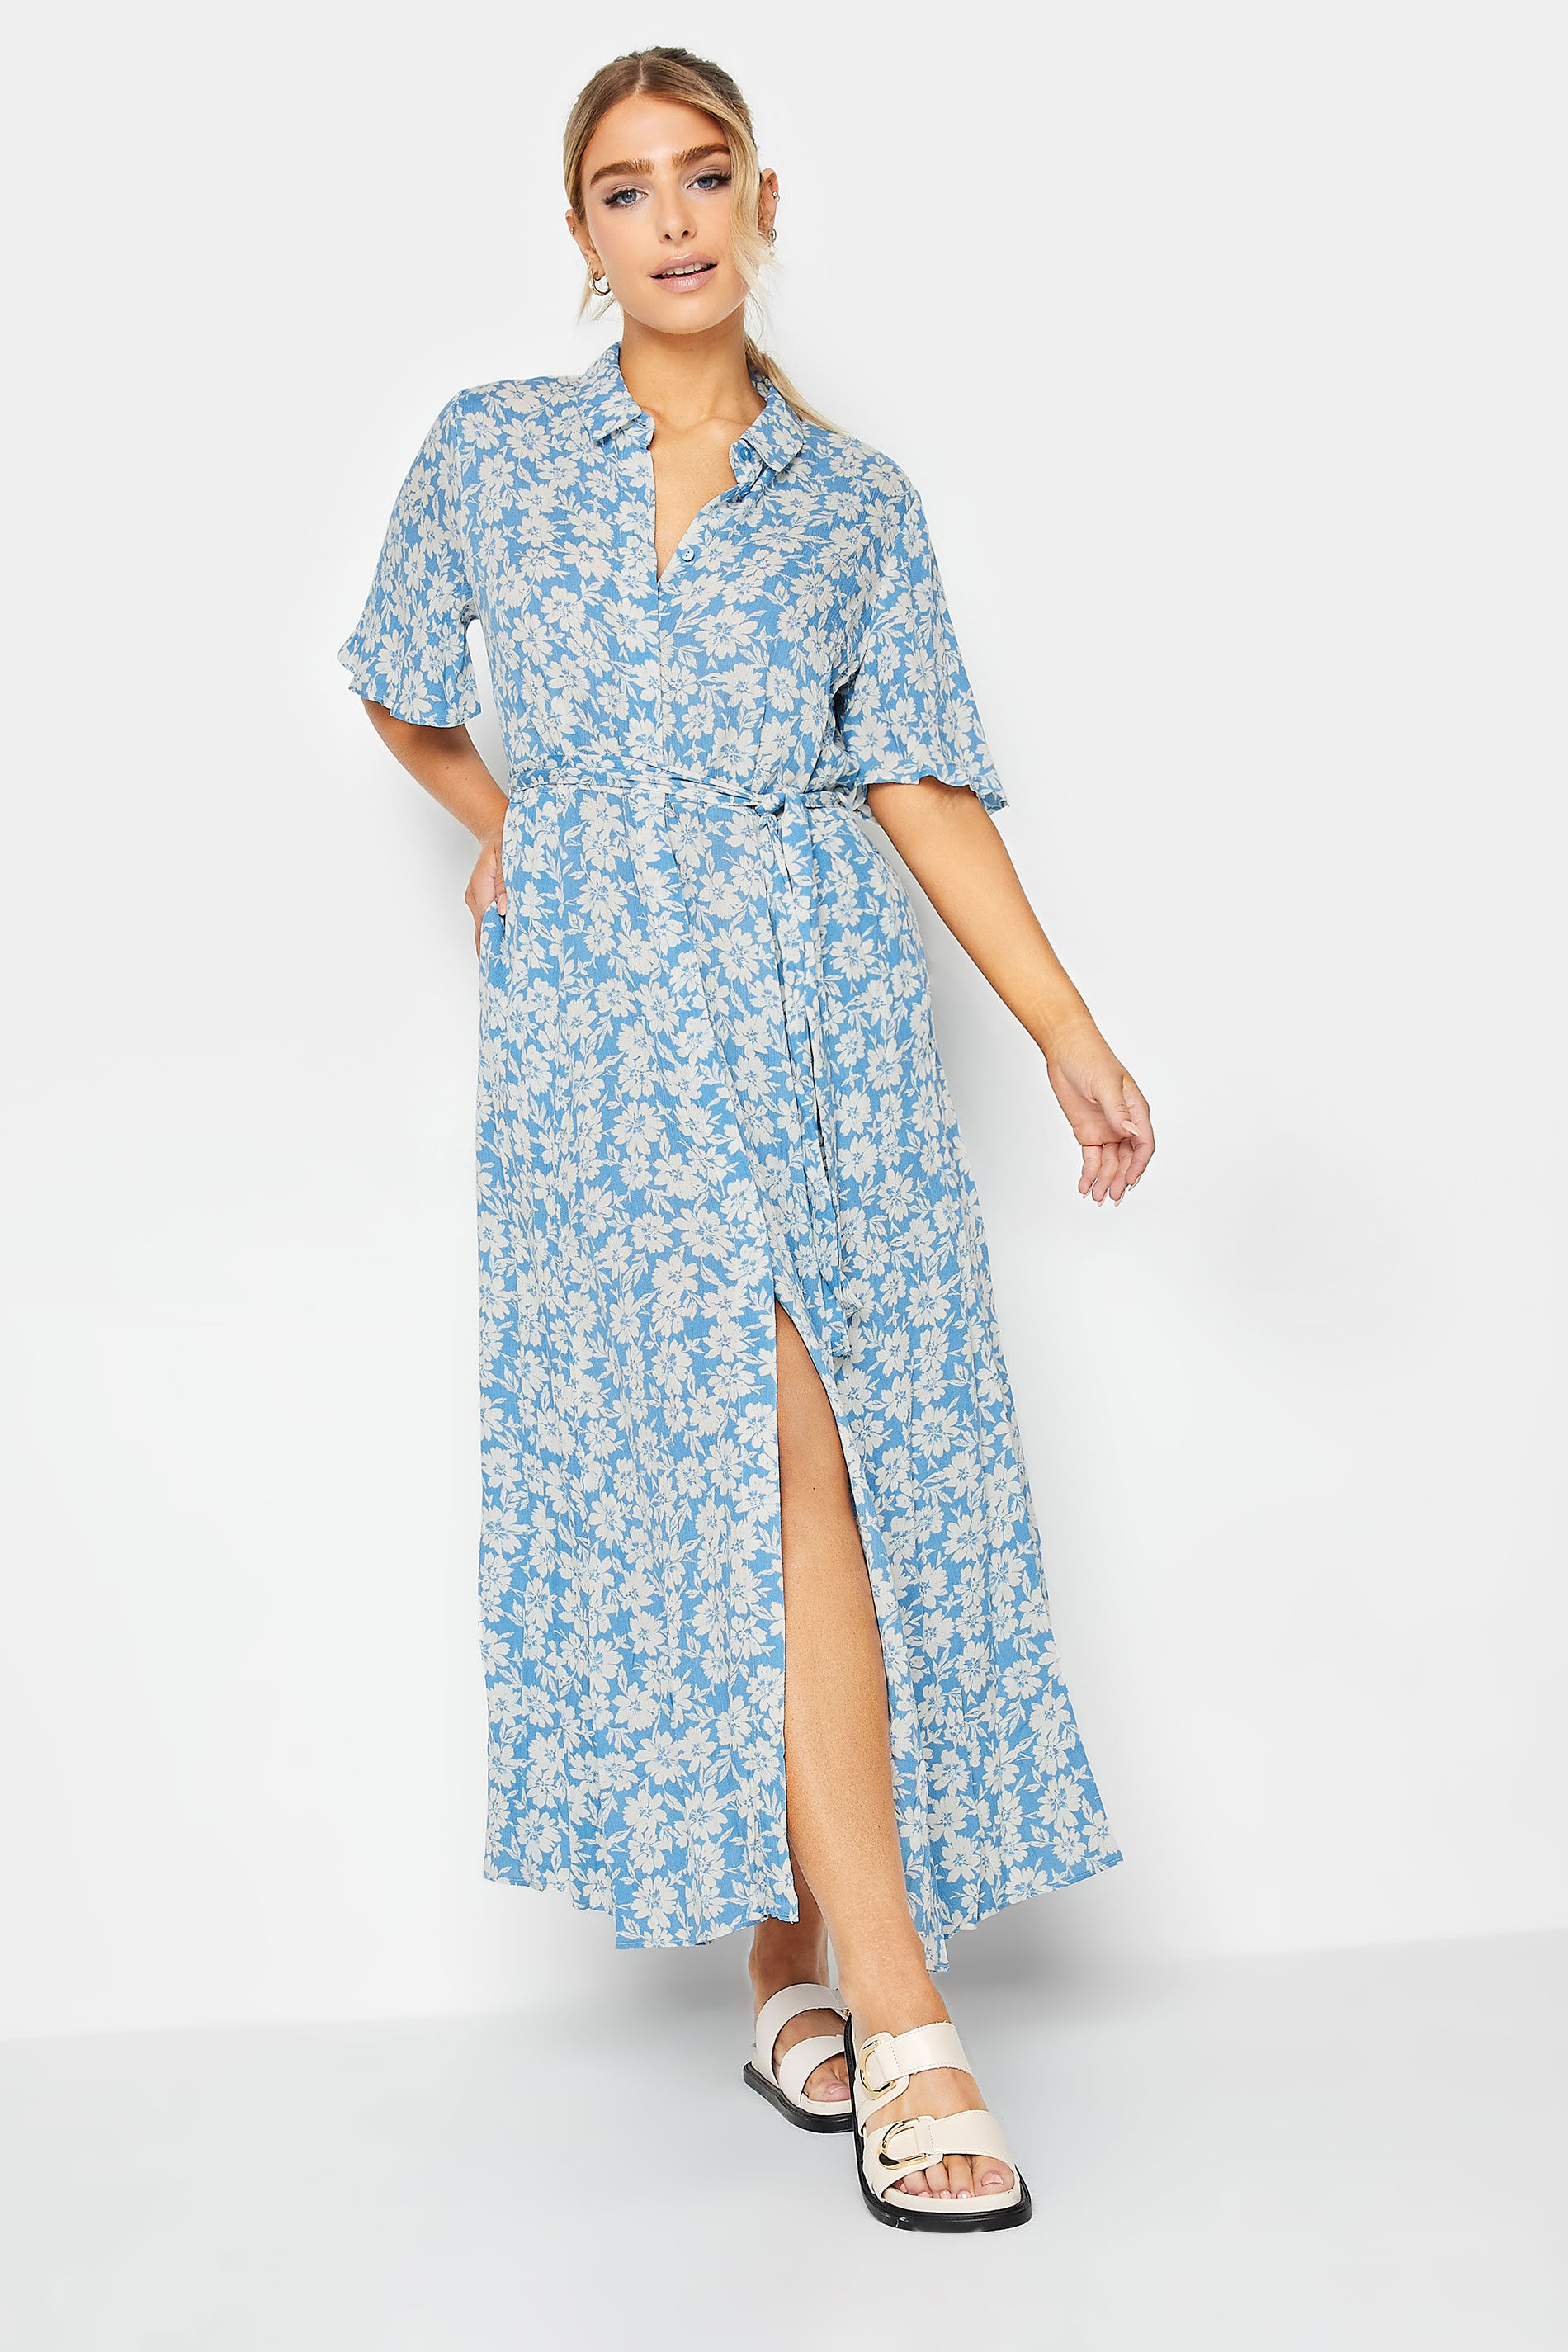 M&Co Light Blue Floral Print Maxi Shirt Dress | M&Co 3